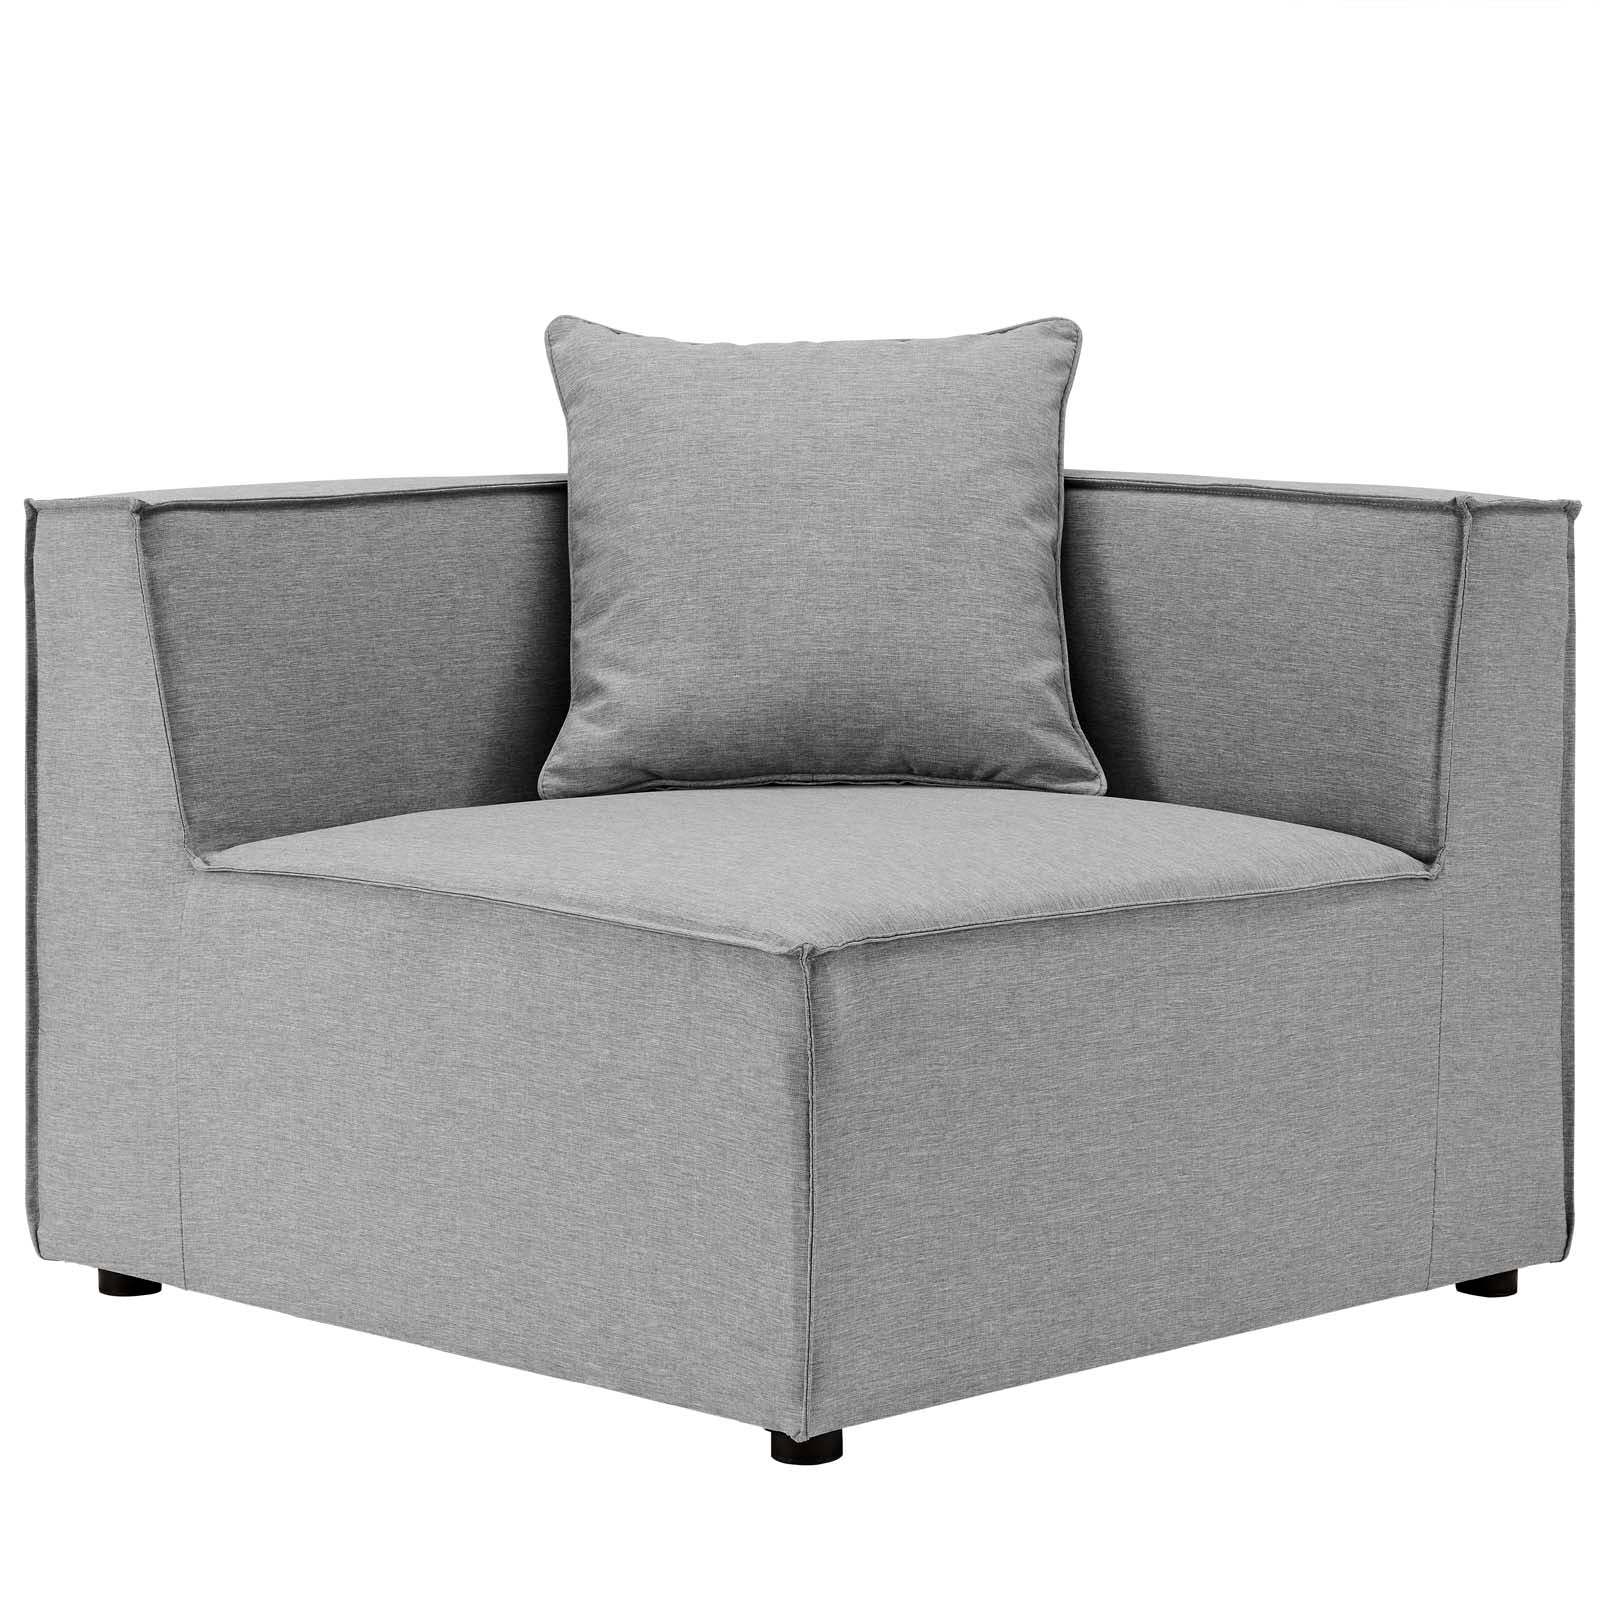 Modway Outdoor Sofas - Saybrook Outdoor Patio 8-Piece Sectional Sofa Gray